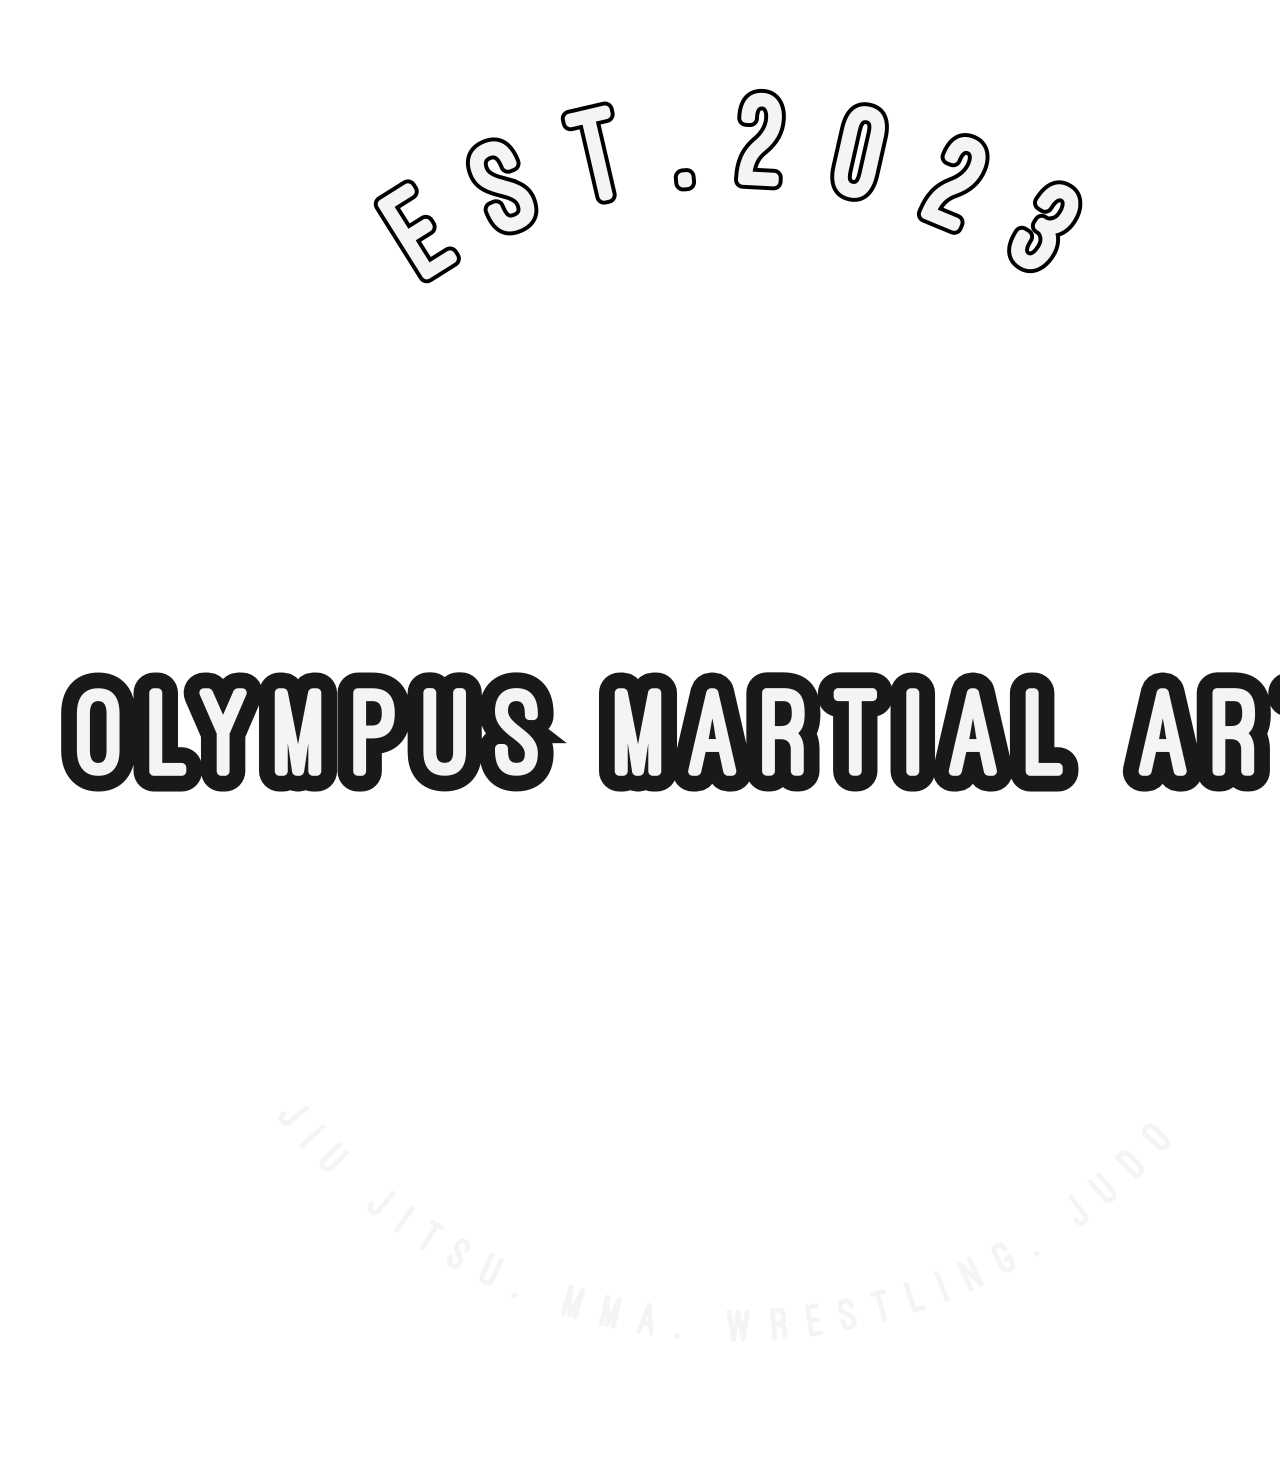 Olympus martial arts 's logo